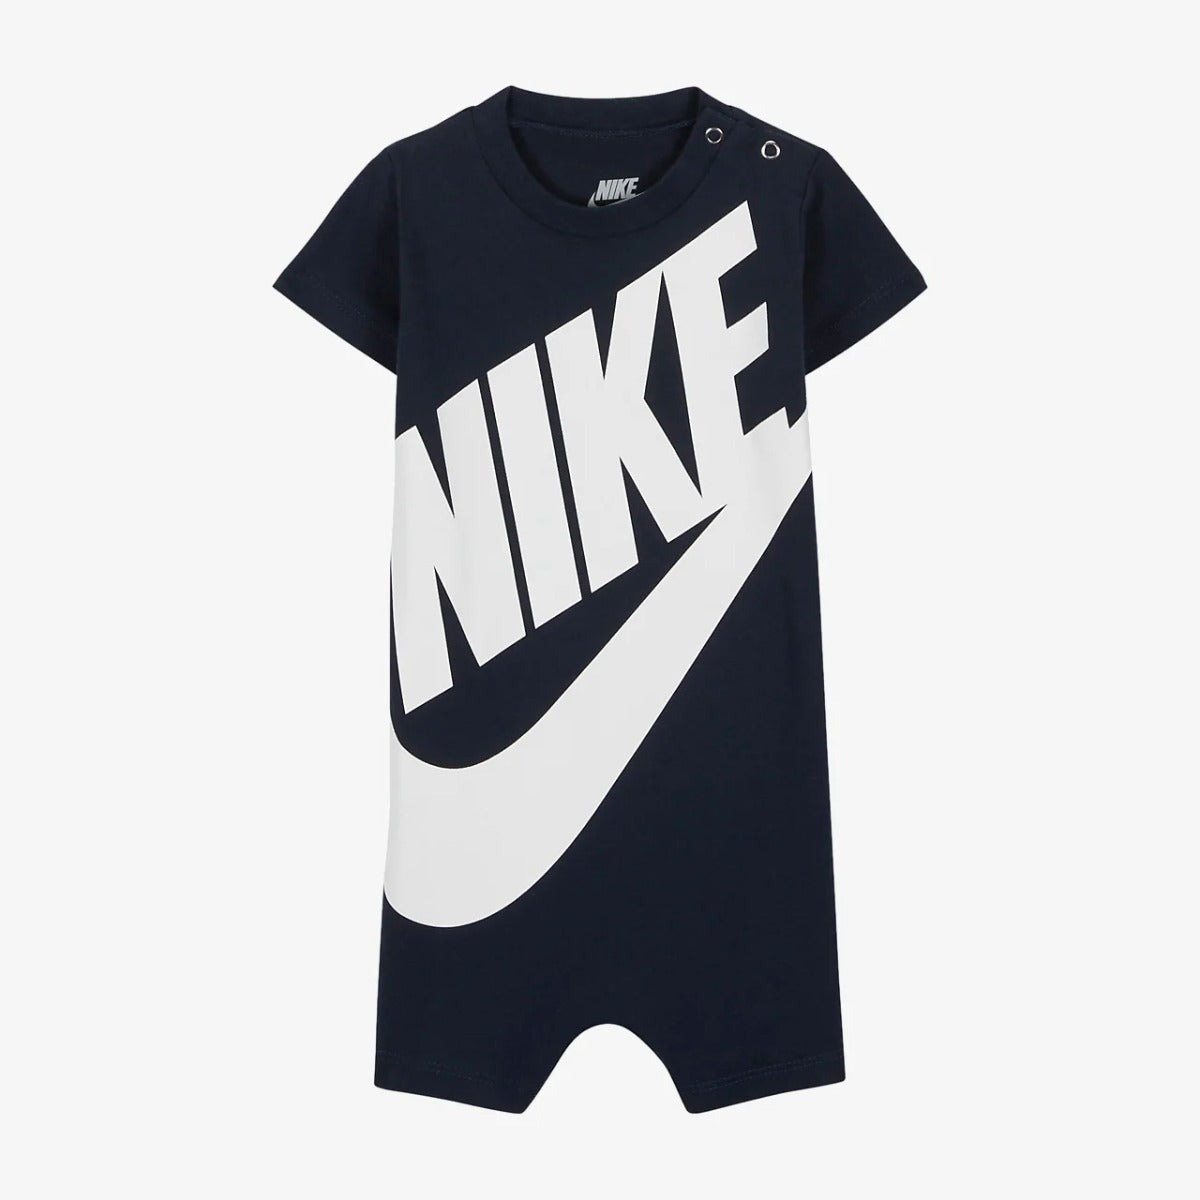 Barboteuse Nike Sportswear Futura Bébé - Noir/Blanc